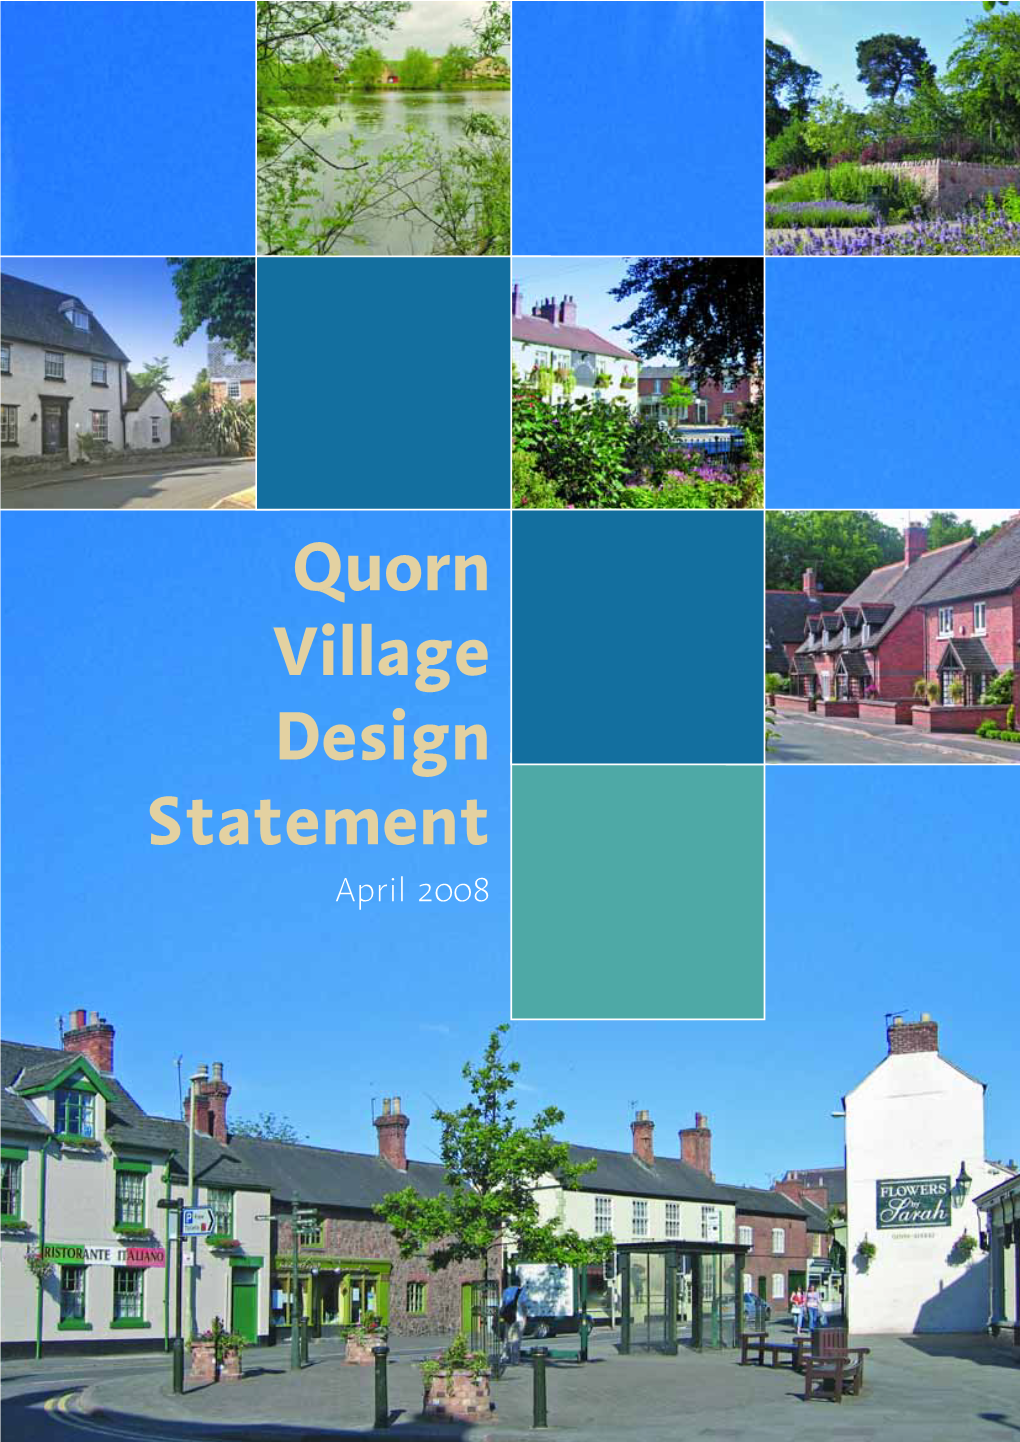 Quorn Village Design Statement April 2008